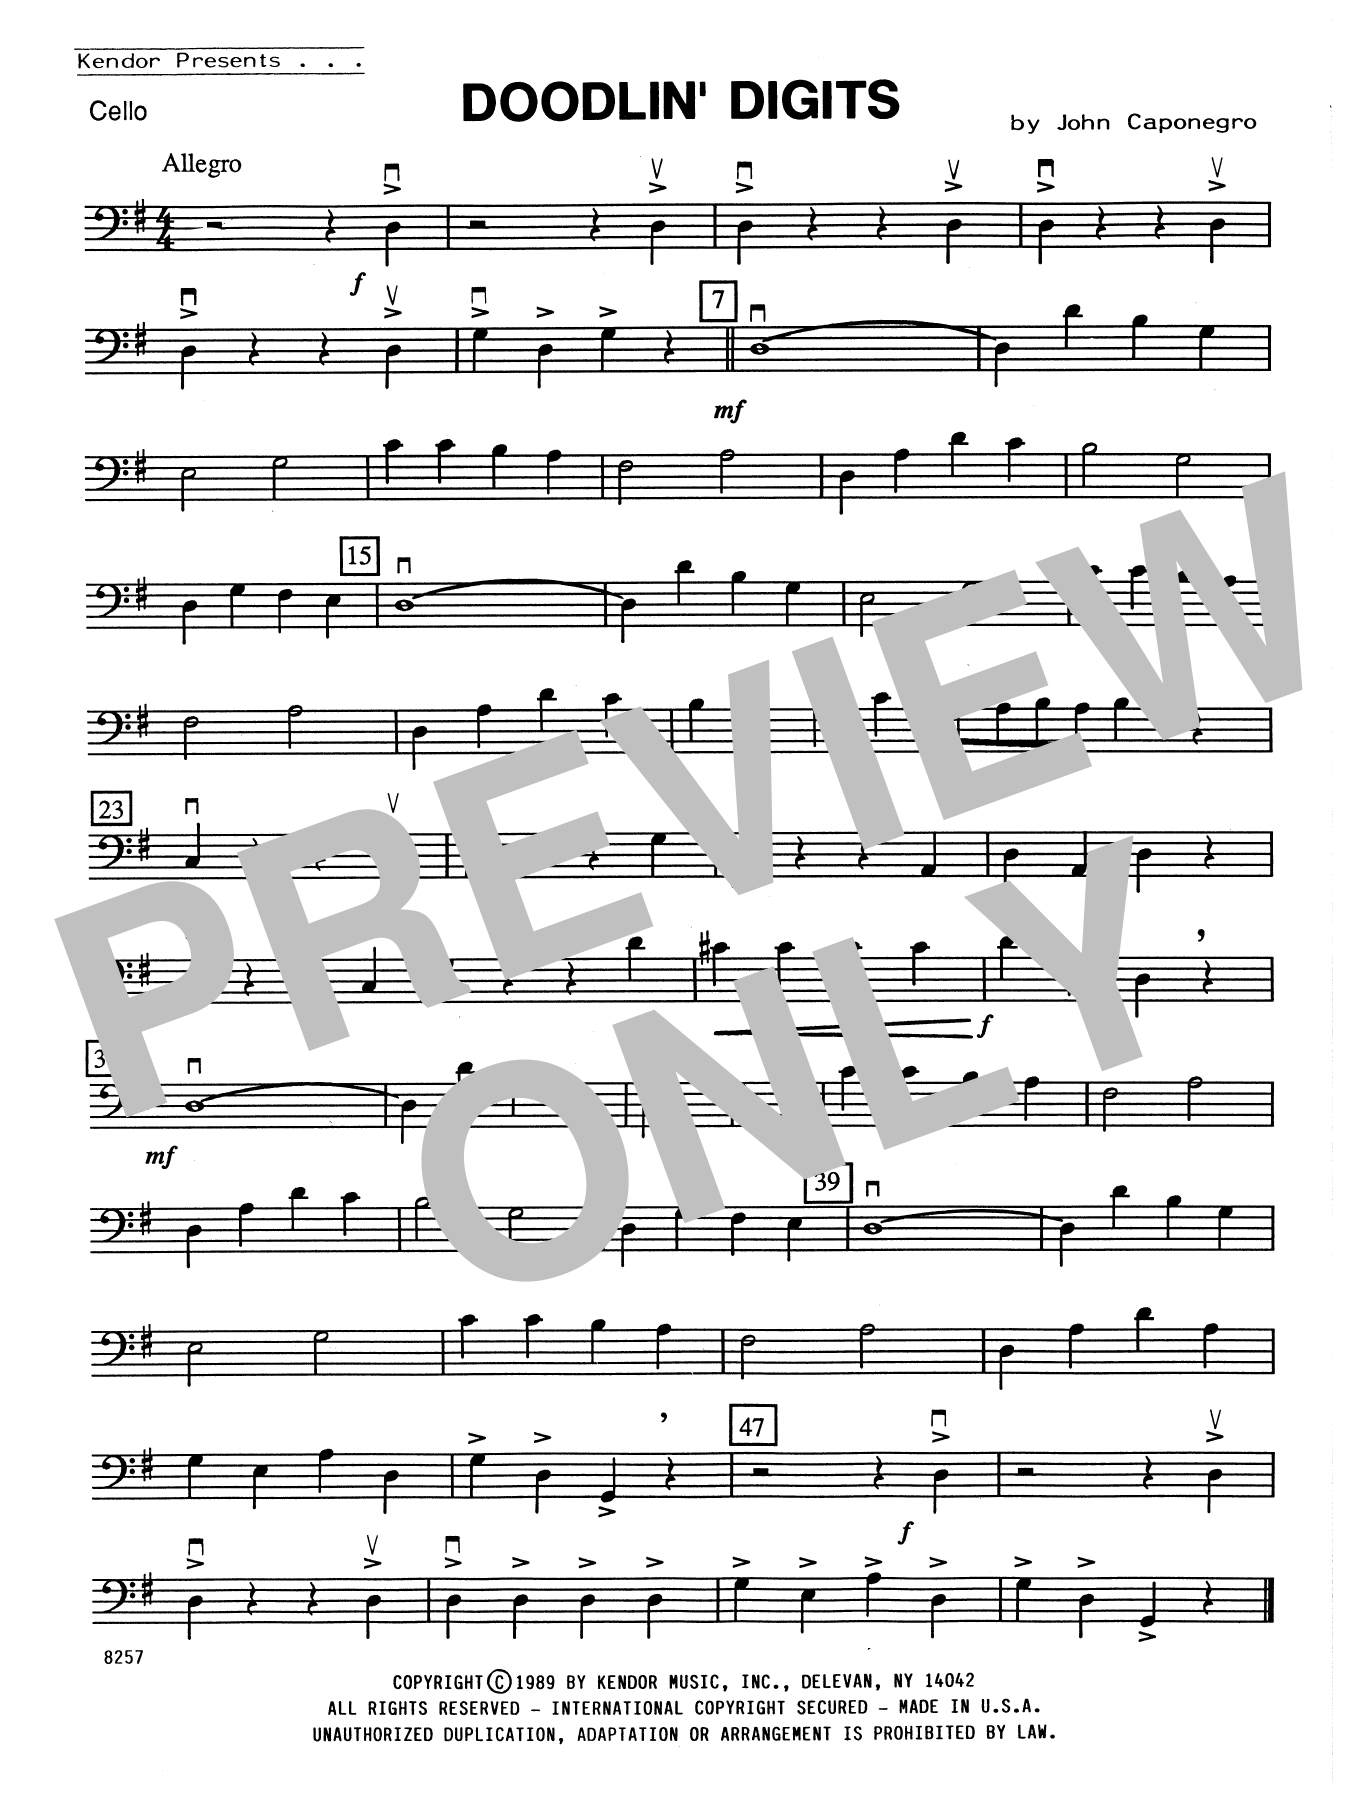 Download John Caponegro Doodlin' Digits - Cello Sheet Music